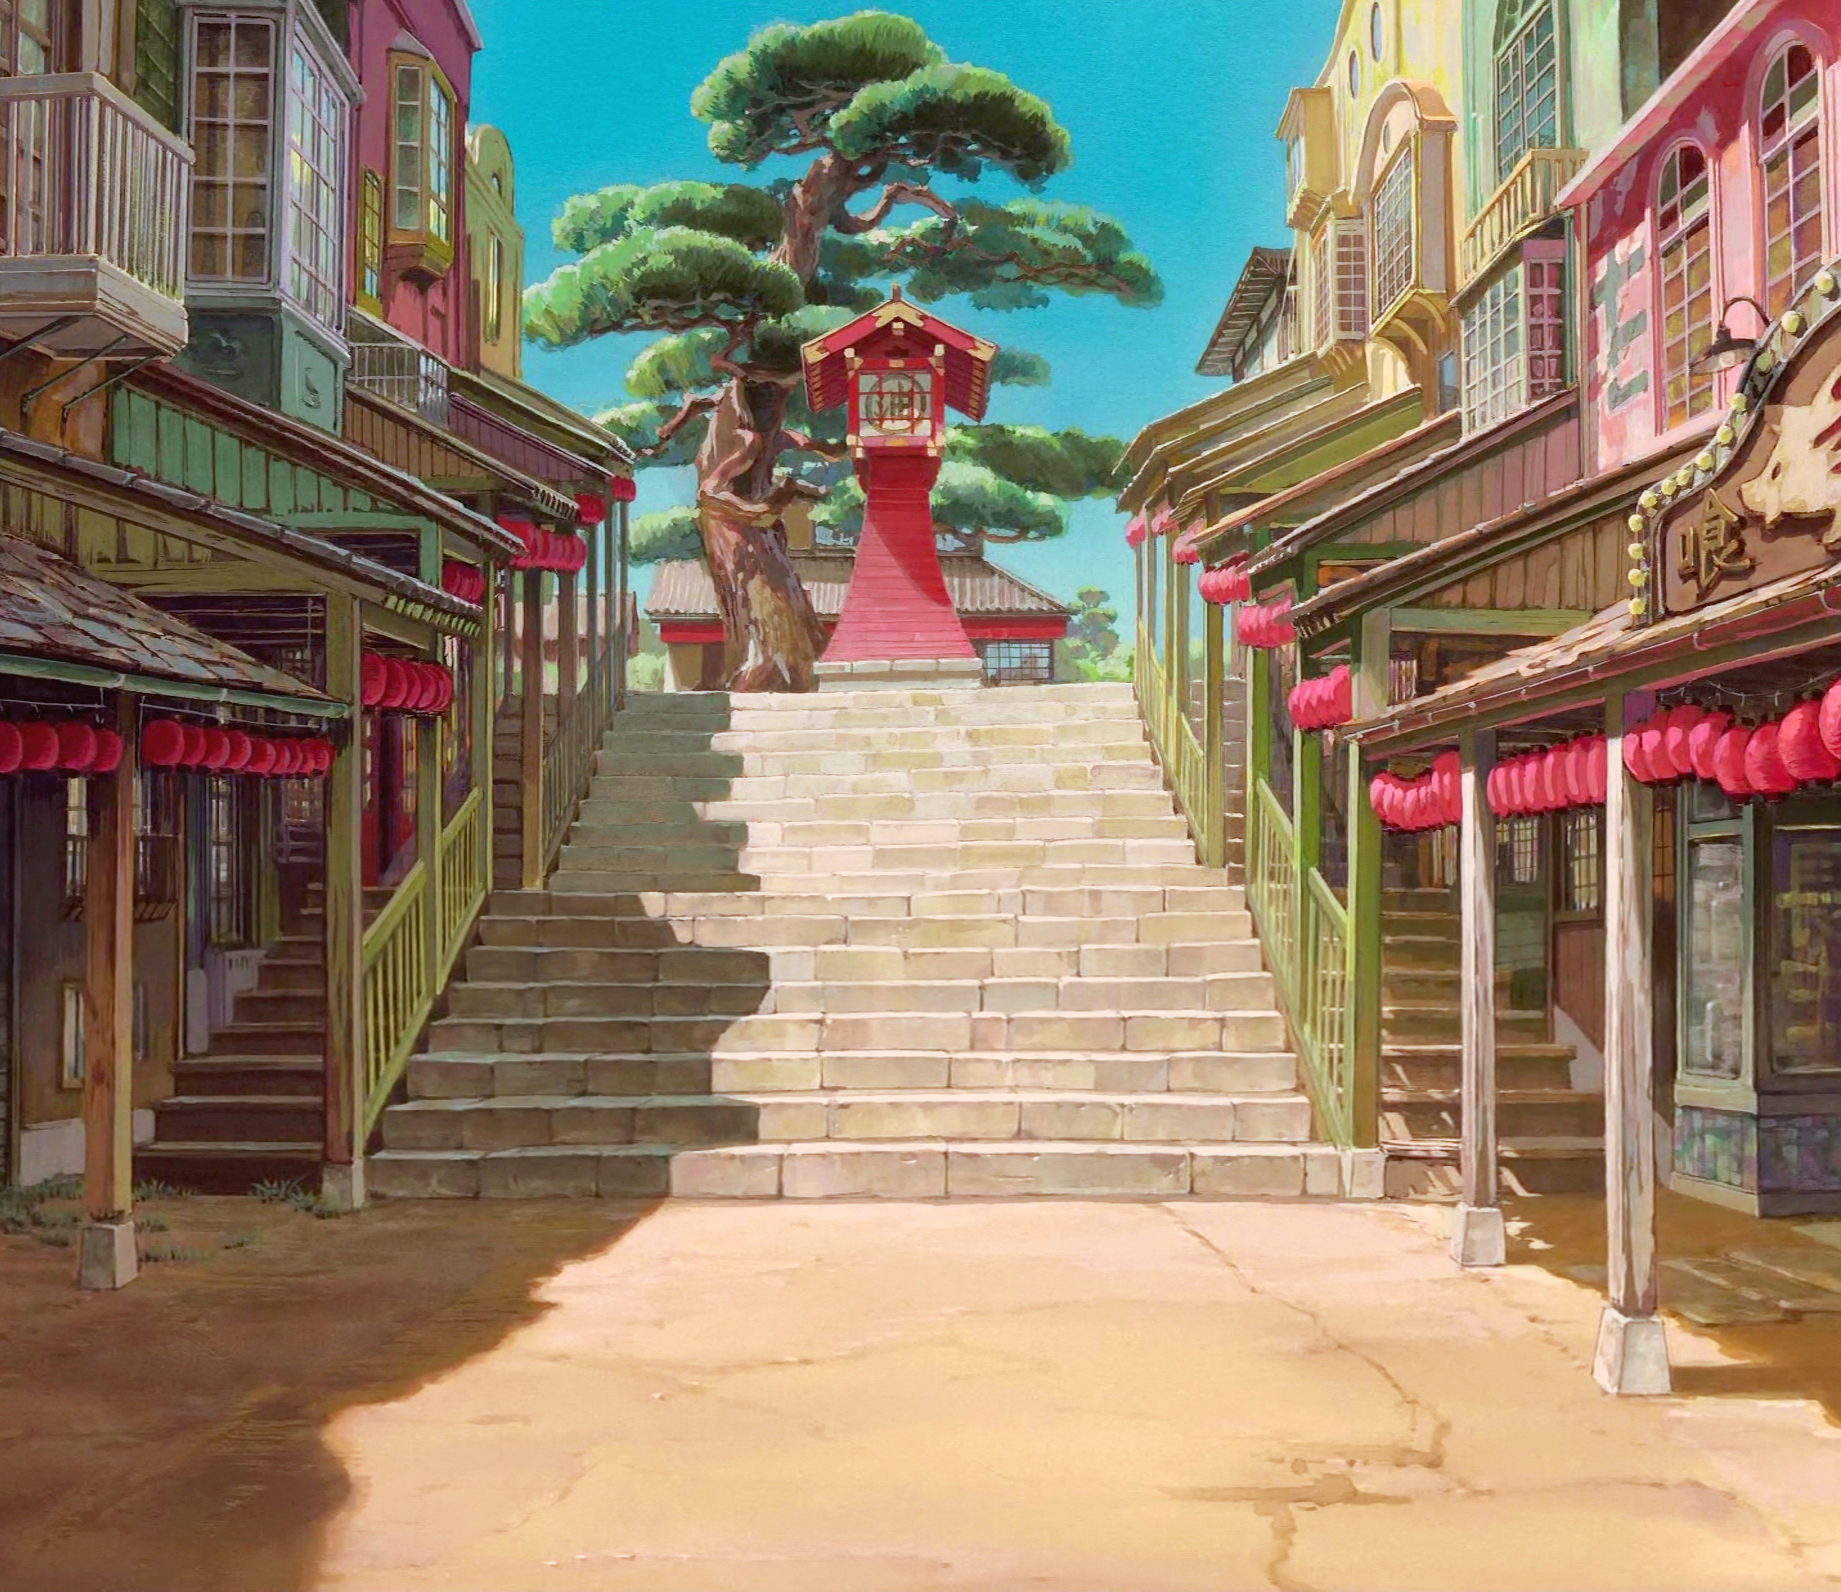 Free Studio Ghibli Image